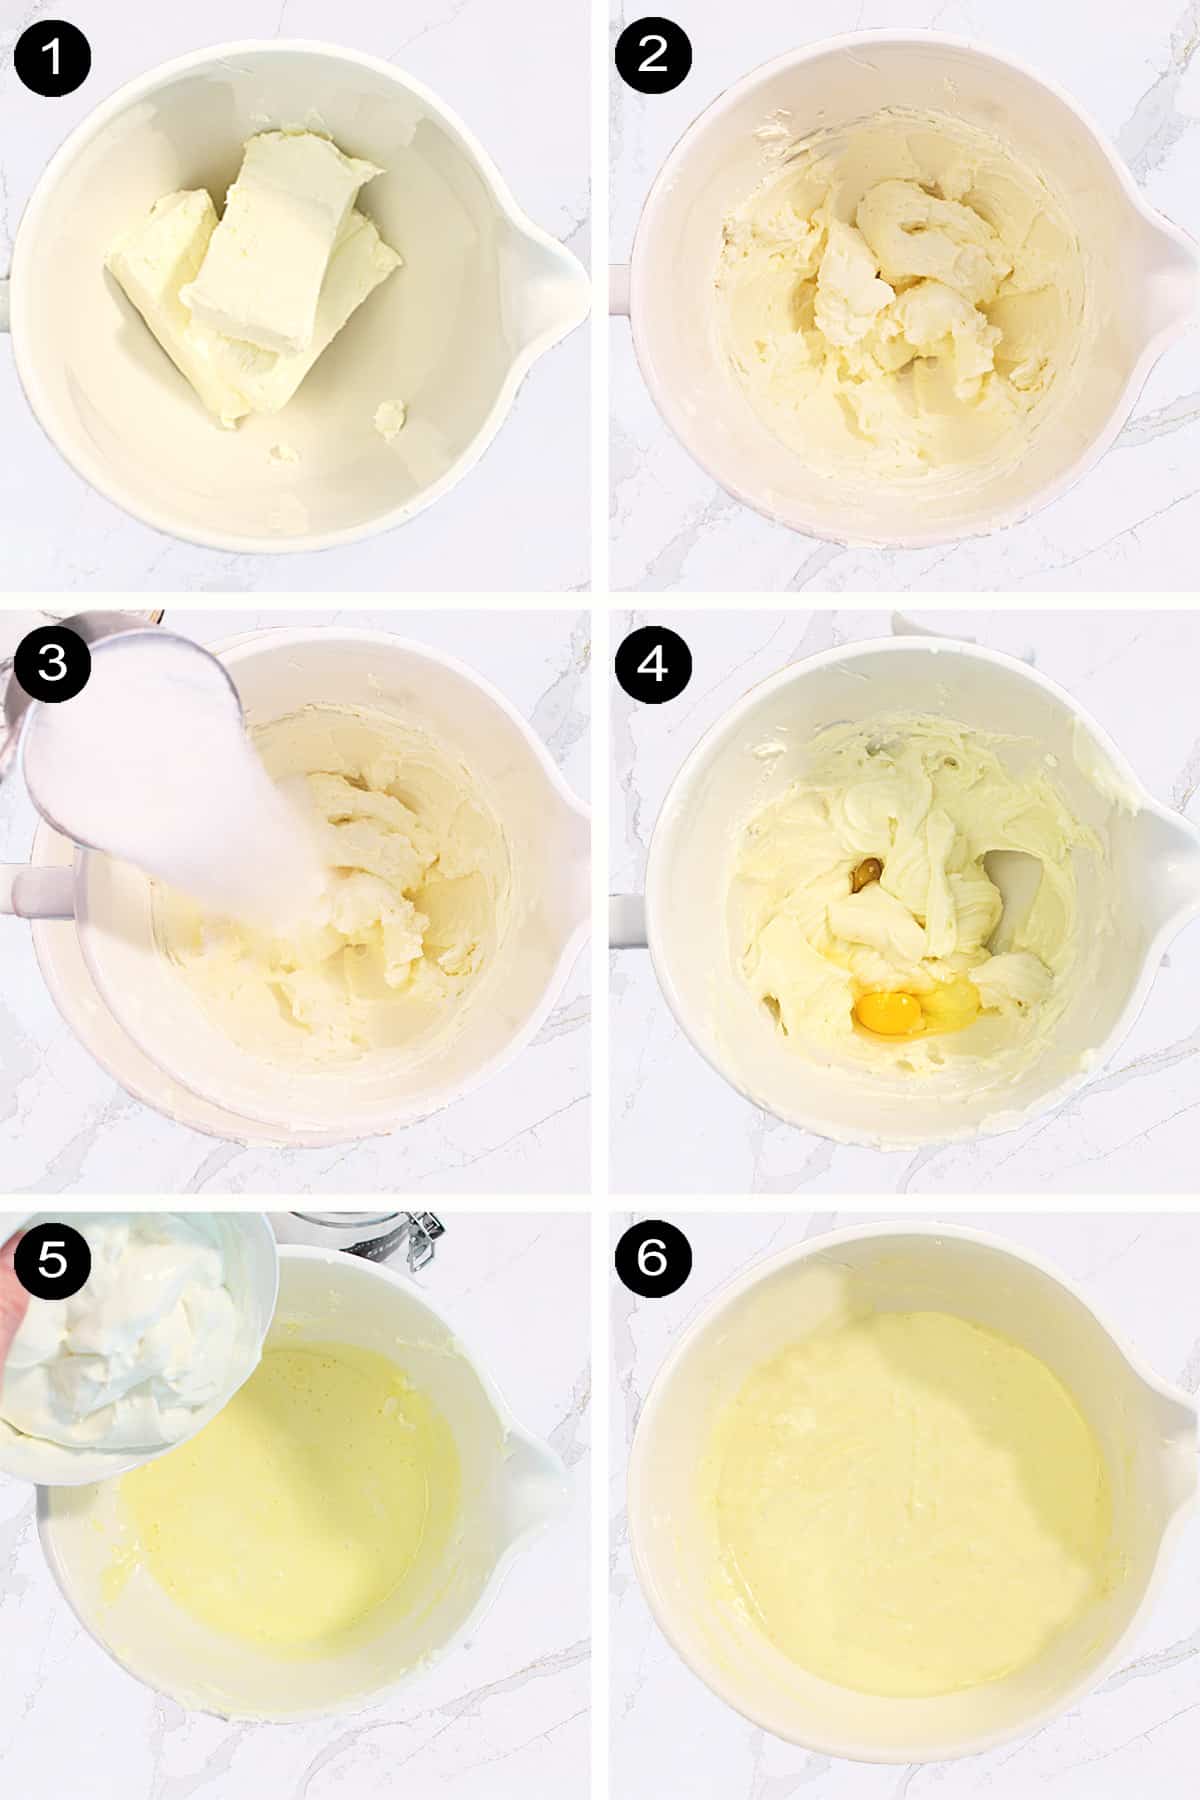 Steps to make cheesecake mixture.